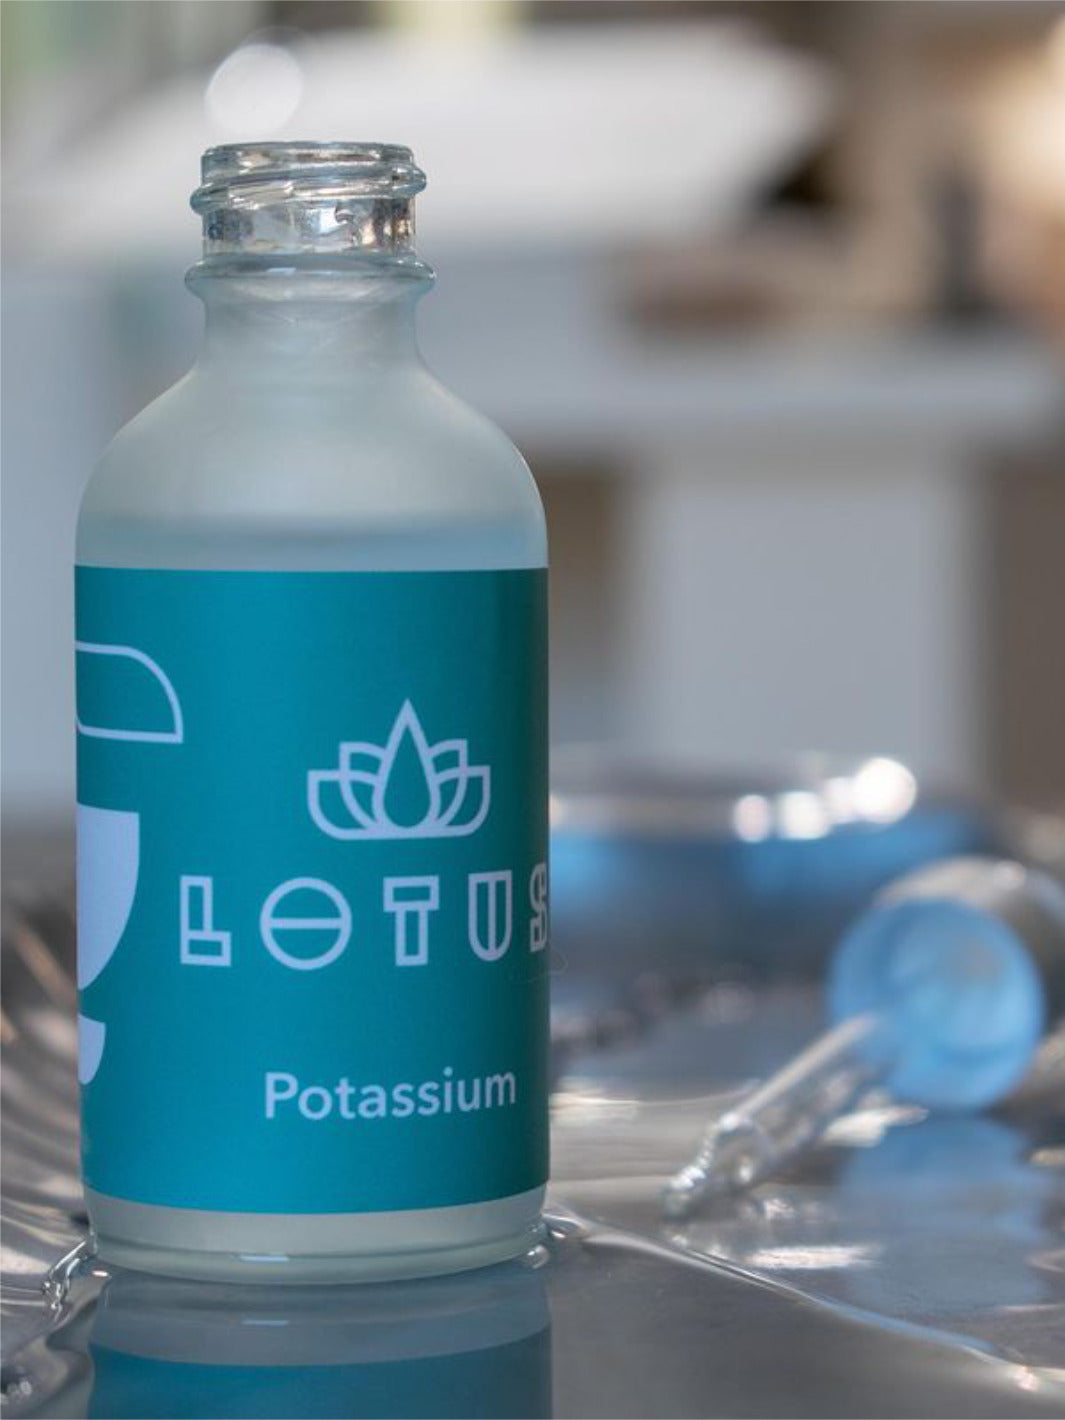 LOTUS WATER Potassium